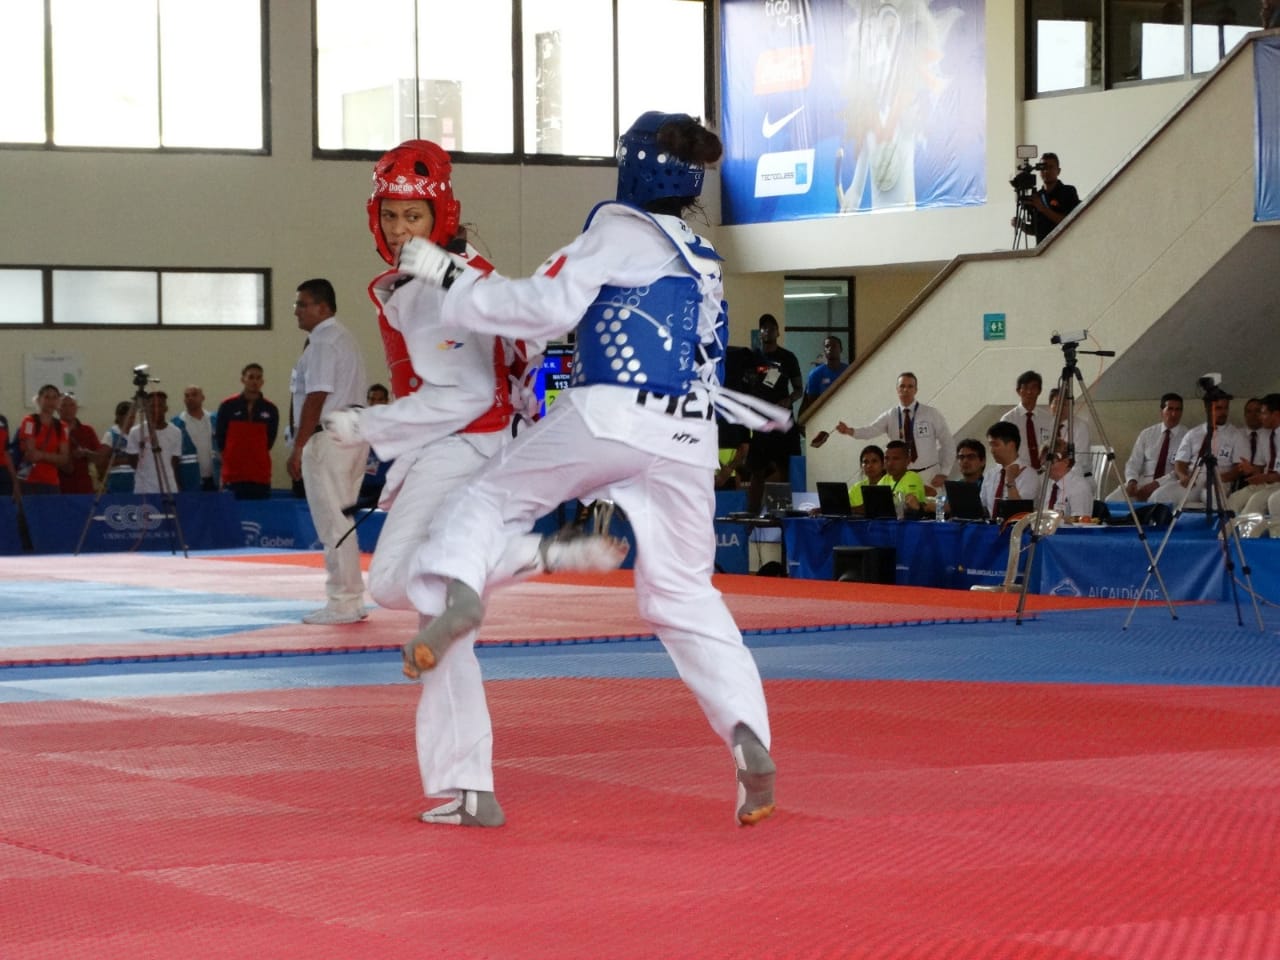 /cms/uploads/image/file/422966/aspectos_taekwondo_tercera_jornada__13_.jpeg